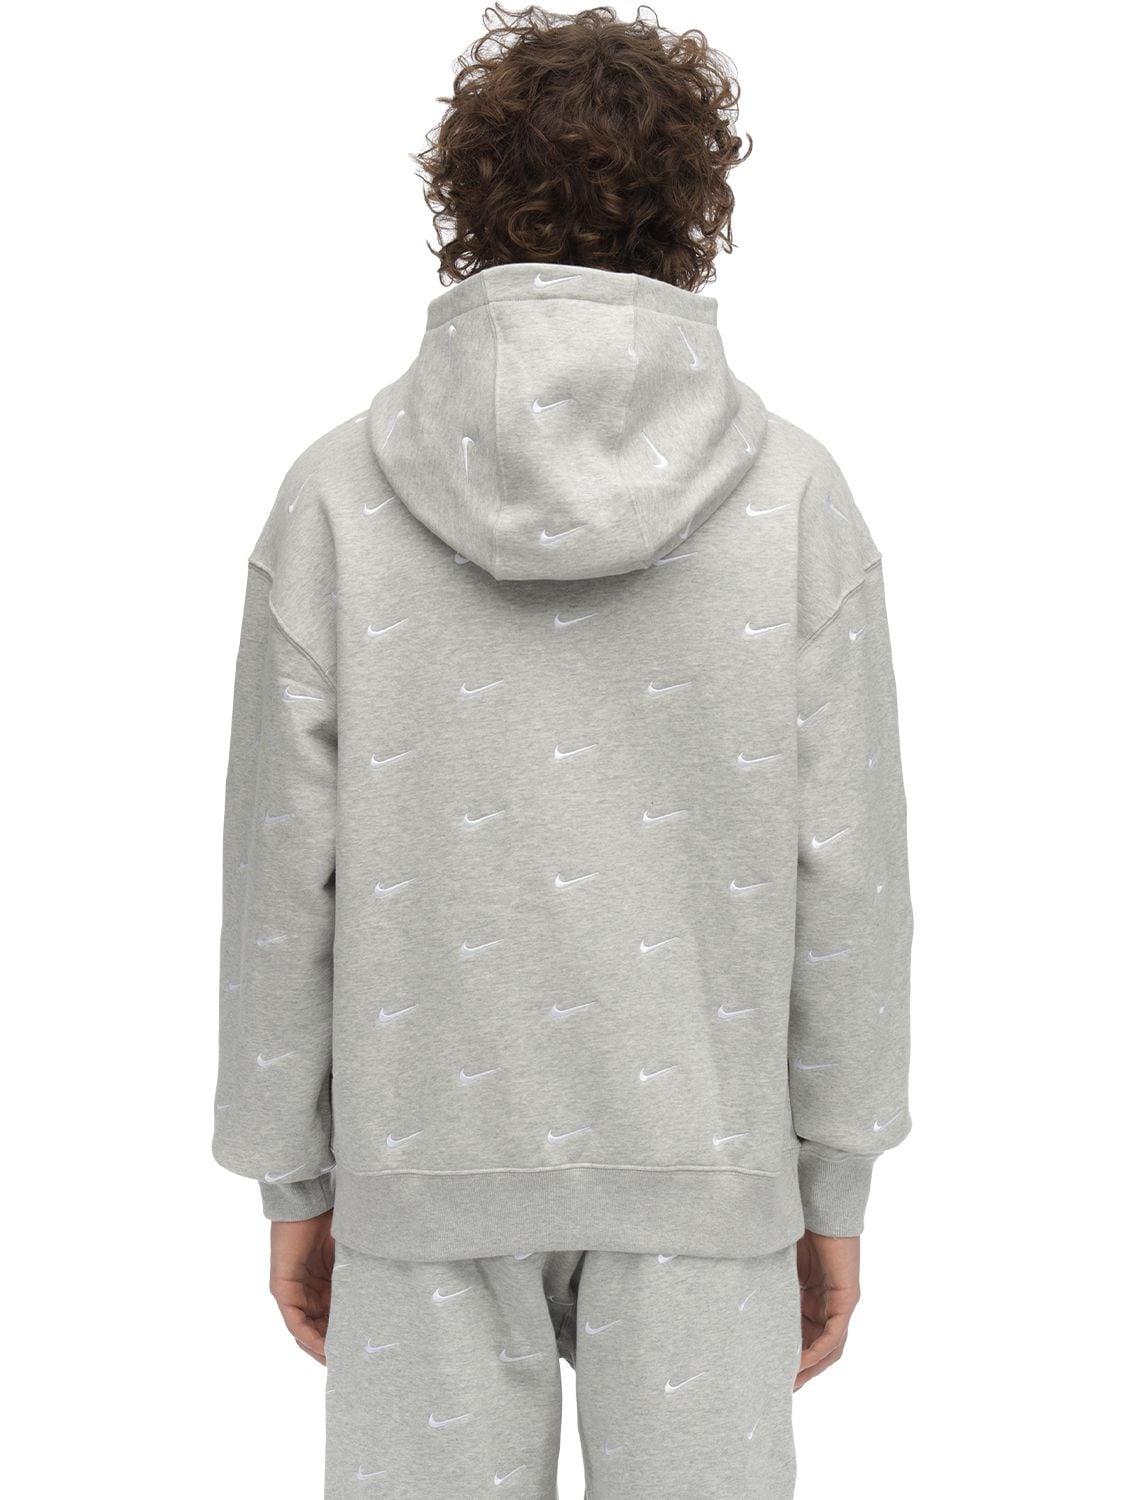 Nike Nrg Swoosh Logo Sweatshirt Hoodie in Heather Grey (Gray) for Men - Lyst